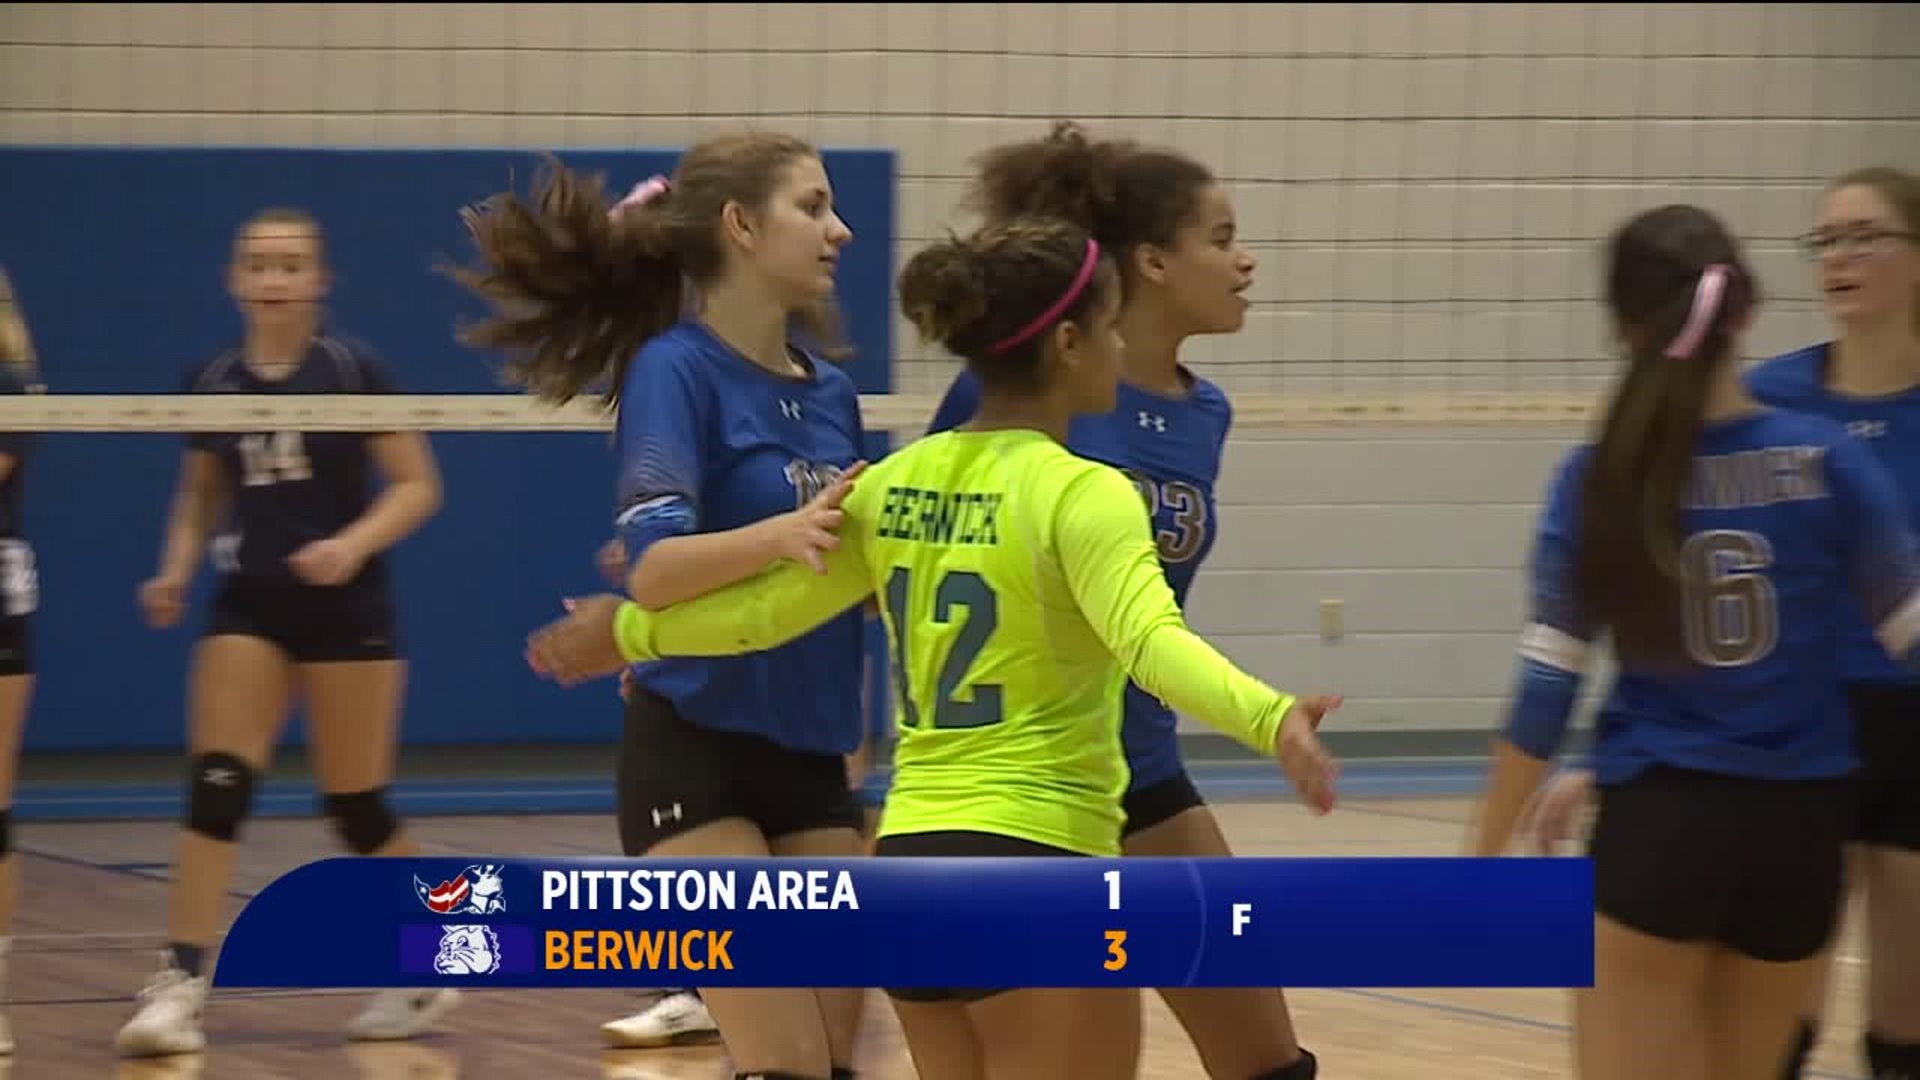 Pittston Area vs Berwick girls volleyball